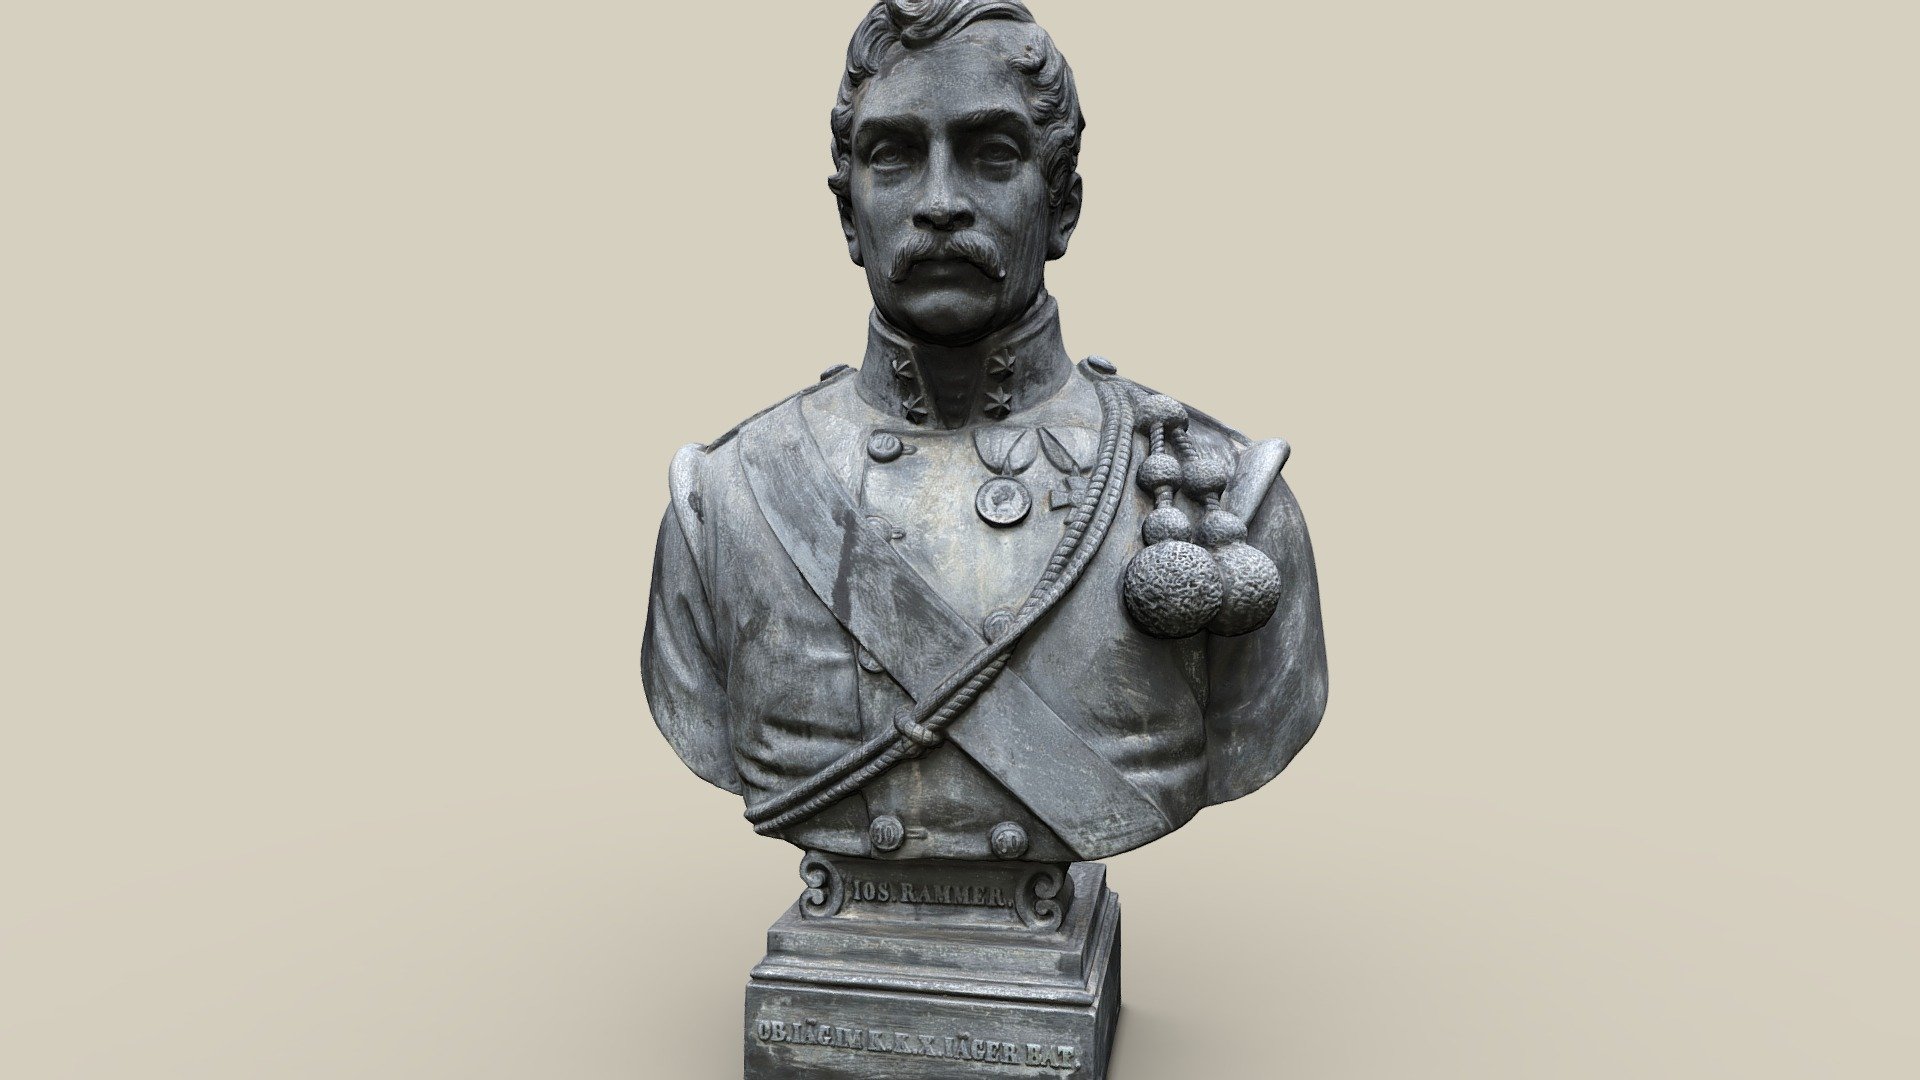 Bust of Josef Rammer on the grounds of the Heldenberg Memorial. Rammer, of the rank of &ldquo;Unterjäger